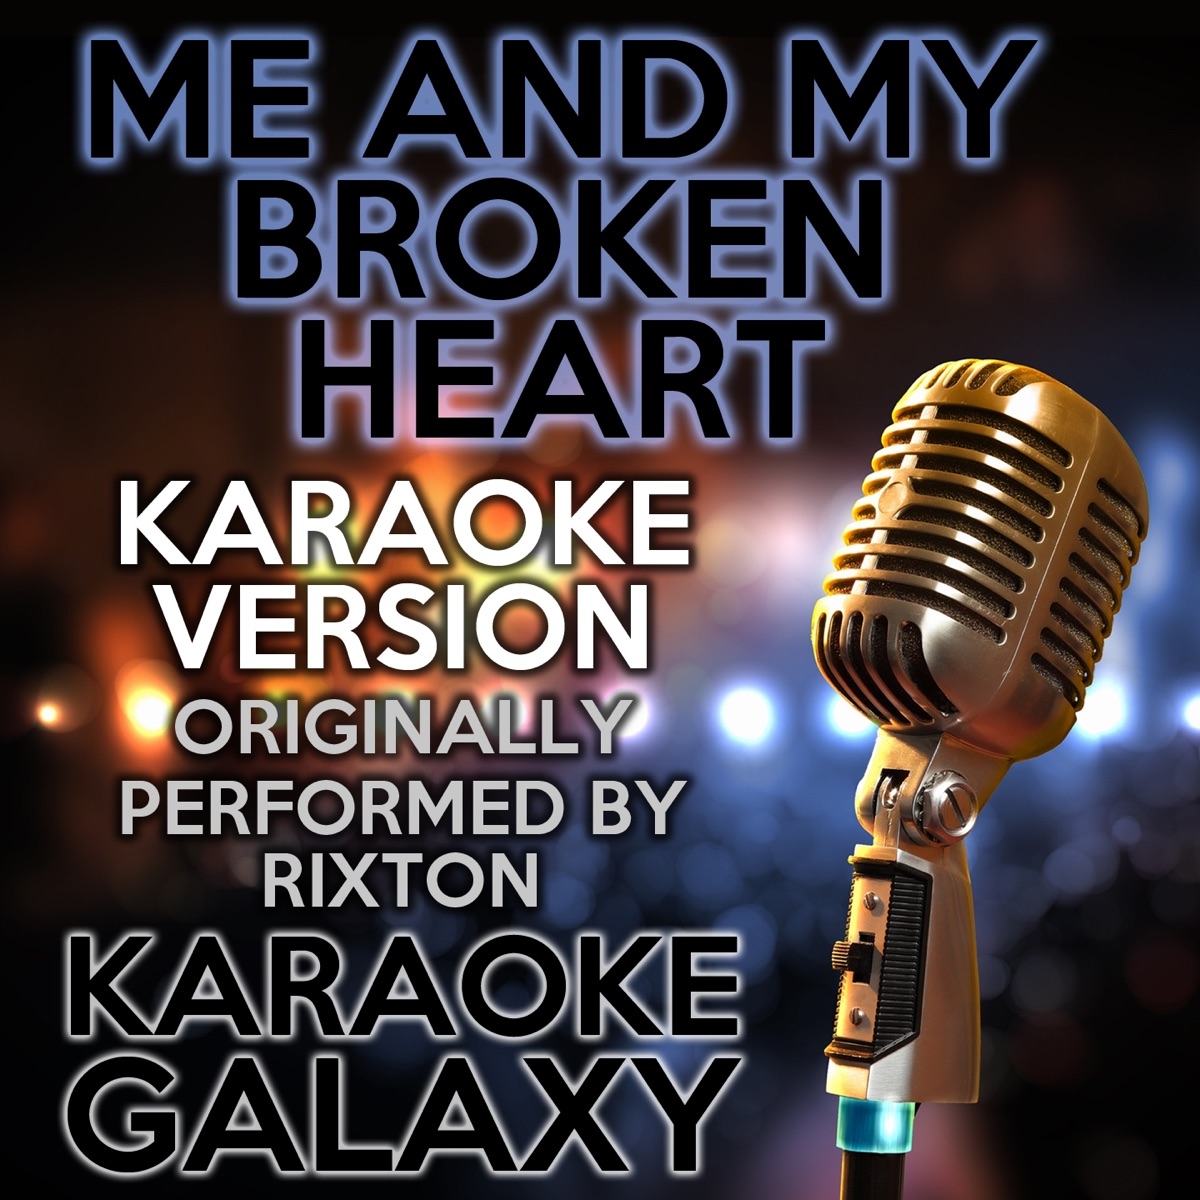 Me and My Broken Heart (Karaoke Version) [Originally Performed By Rixton] -  Single - Album by Karaoke Galaxy - Apple Music